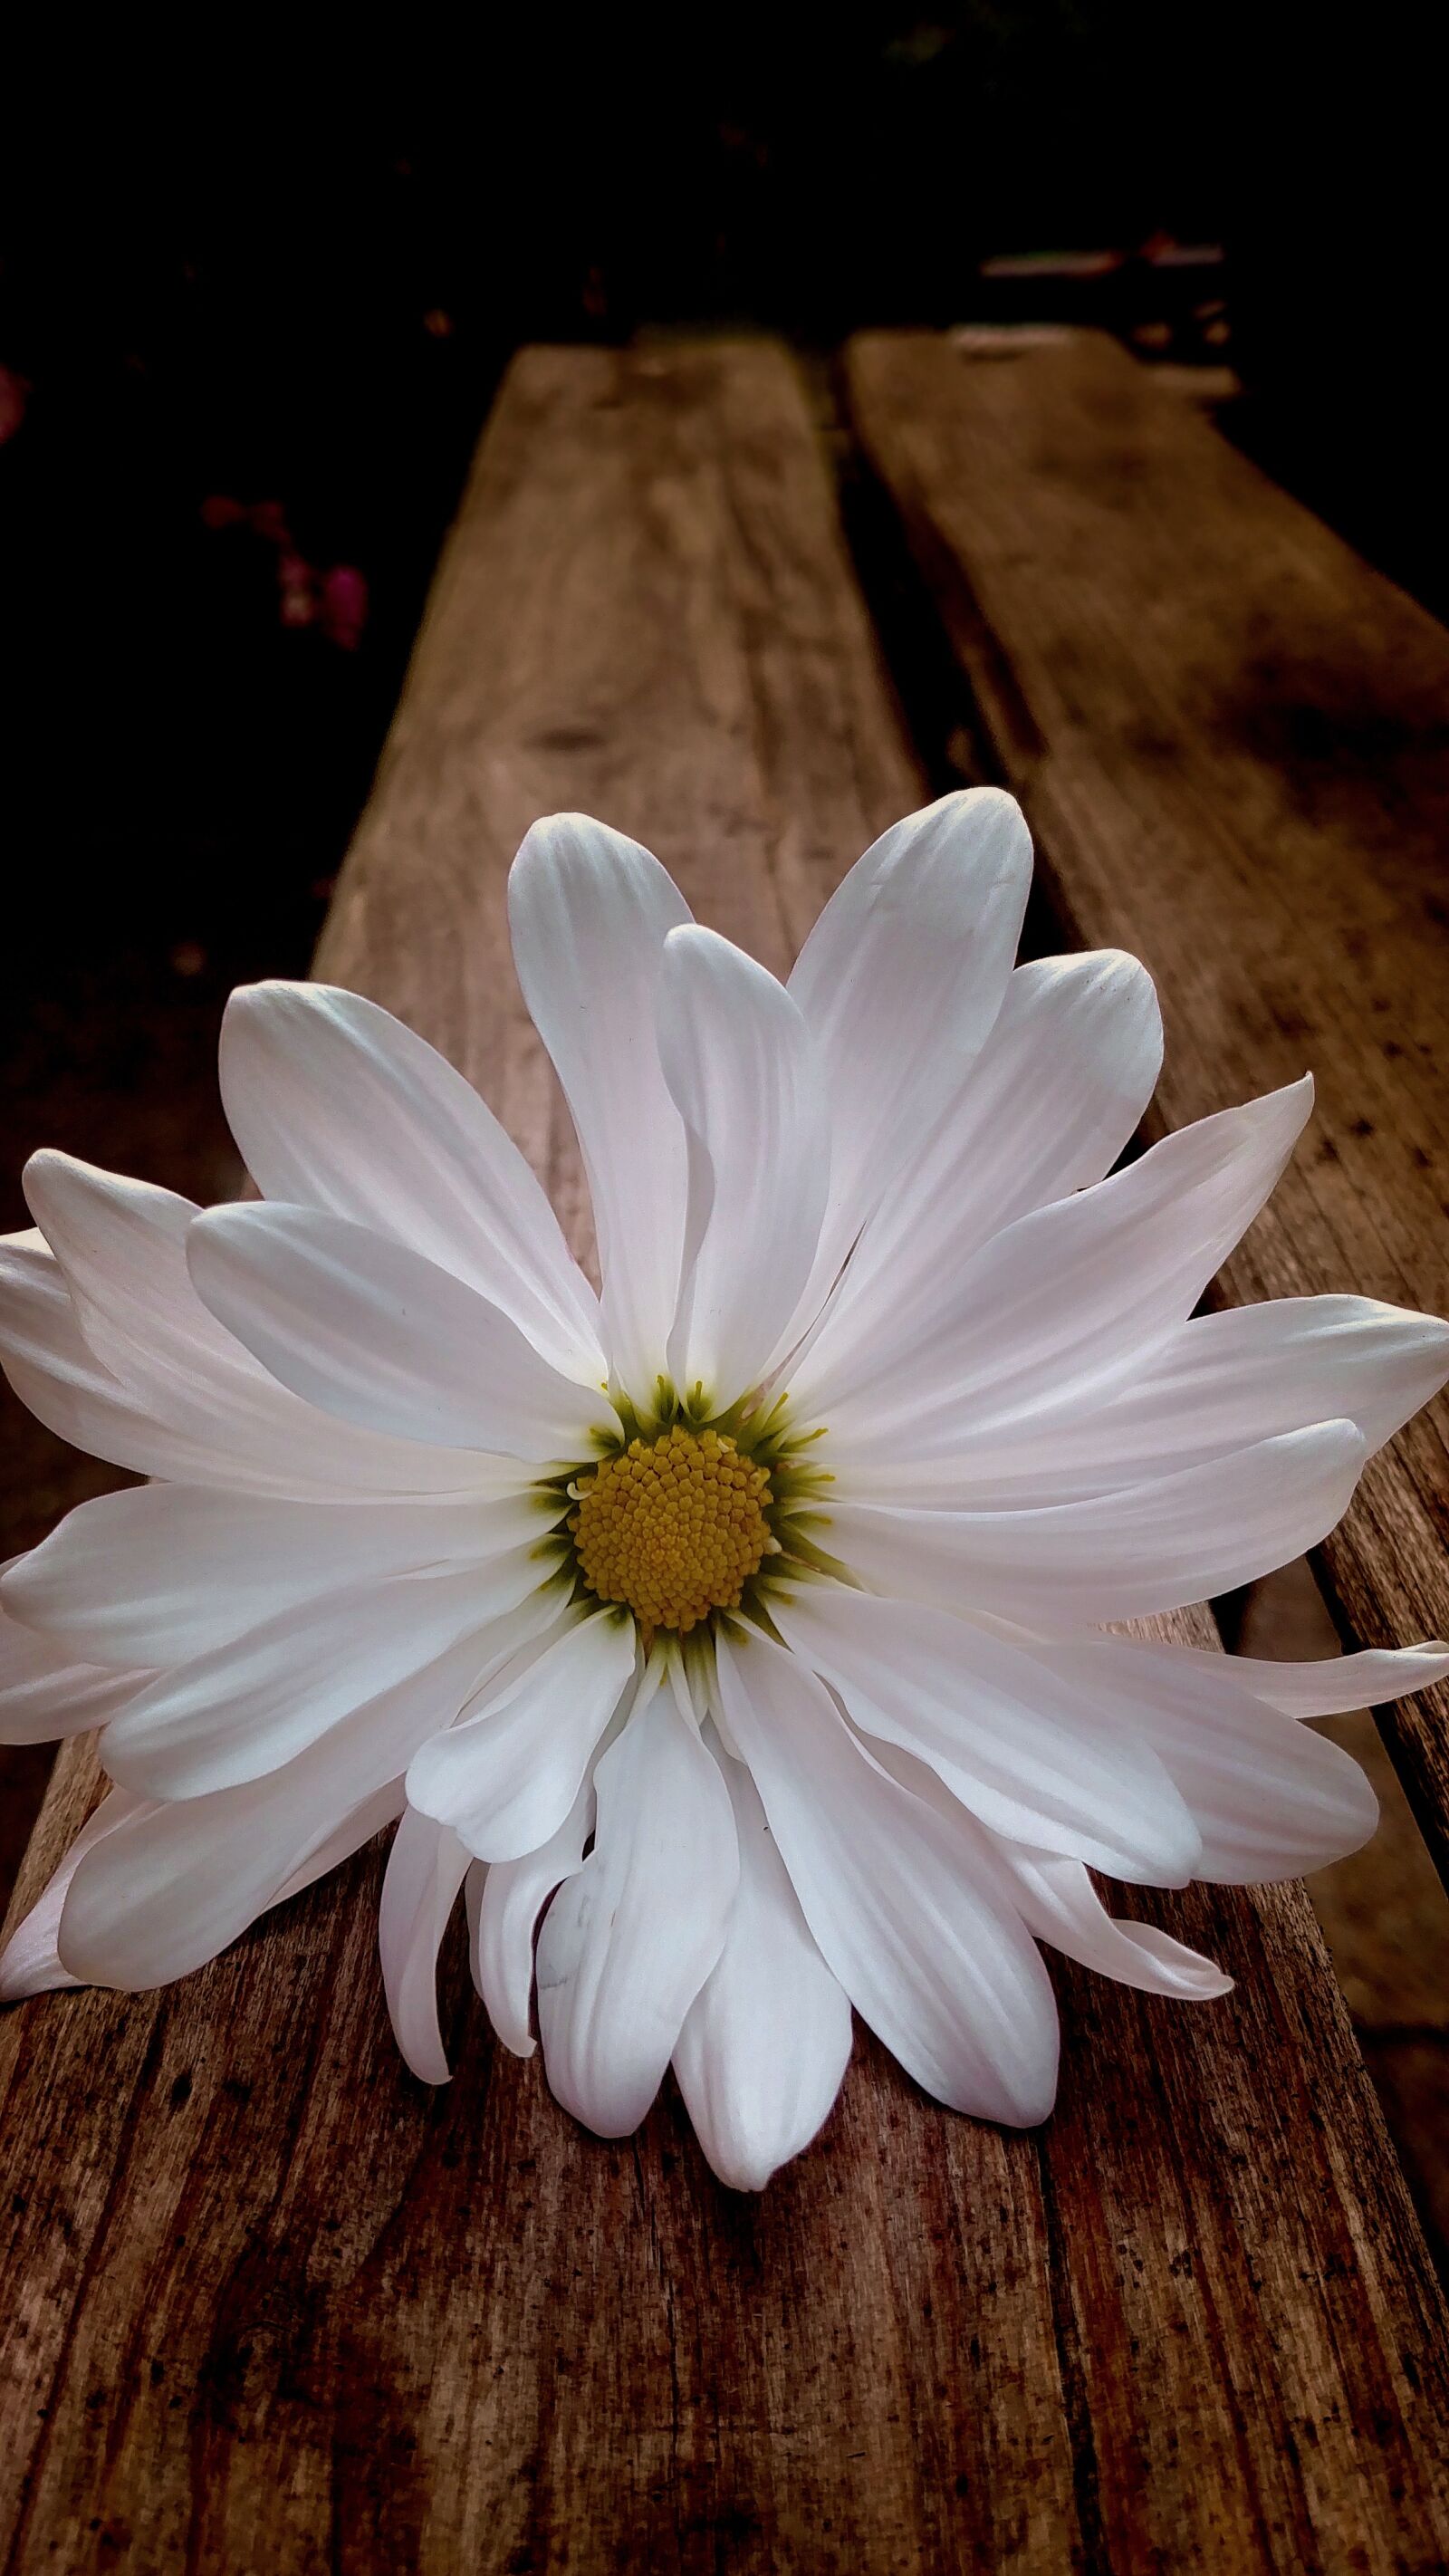 LG G6 sample photo. Daisy, white daisy, flower photography